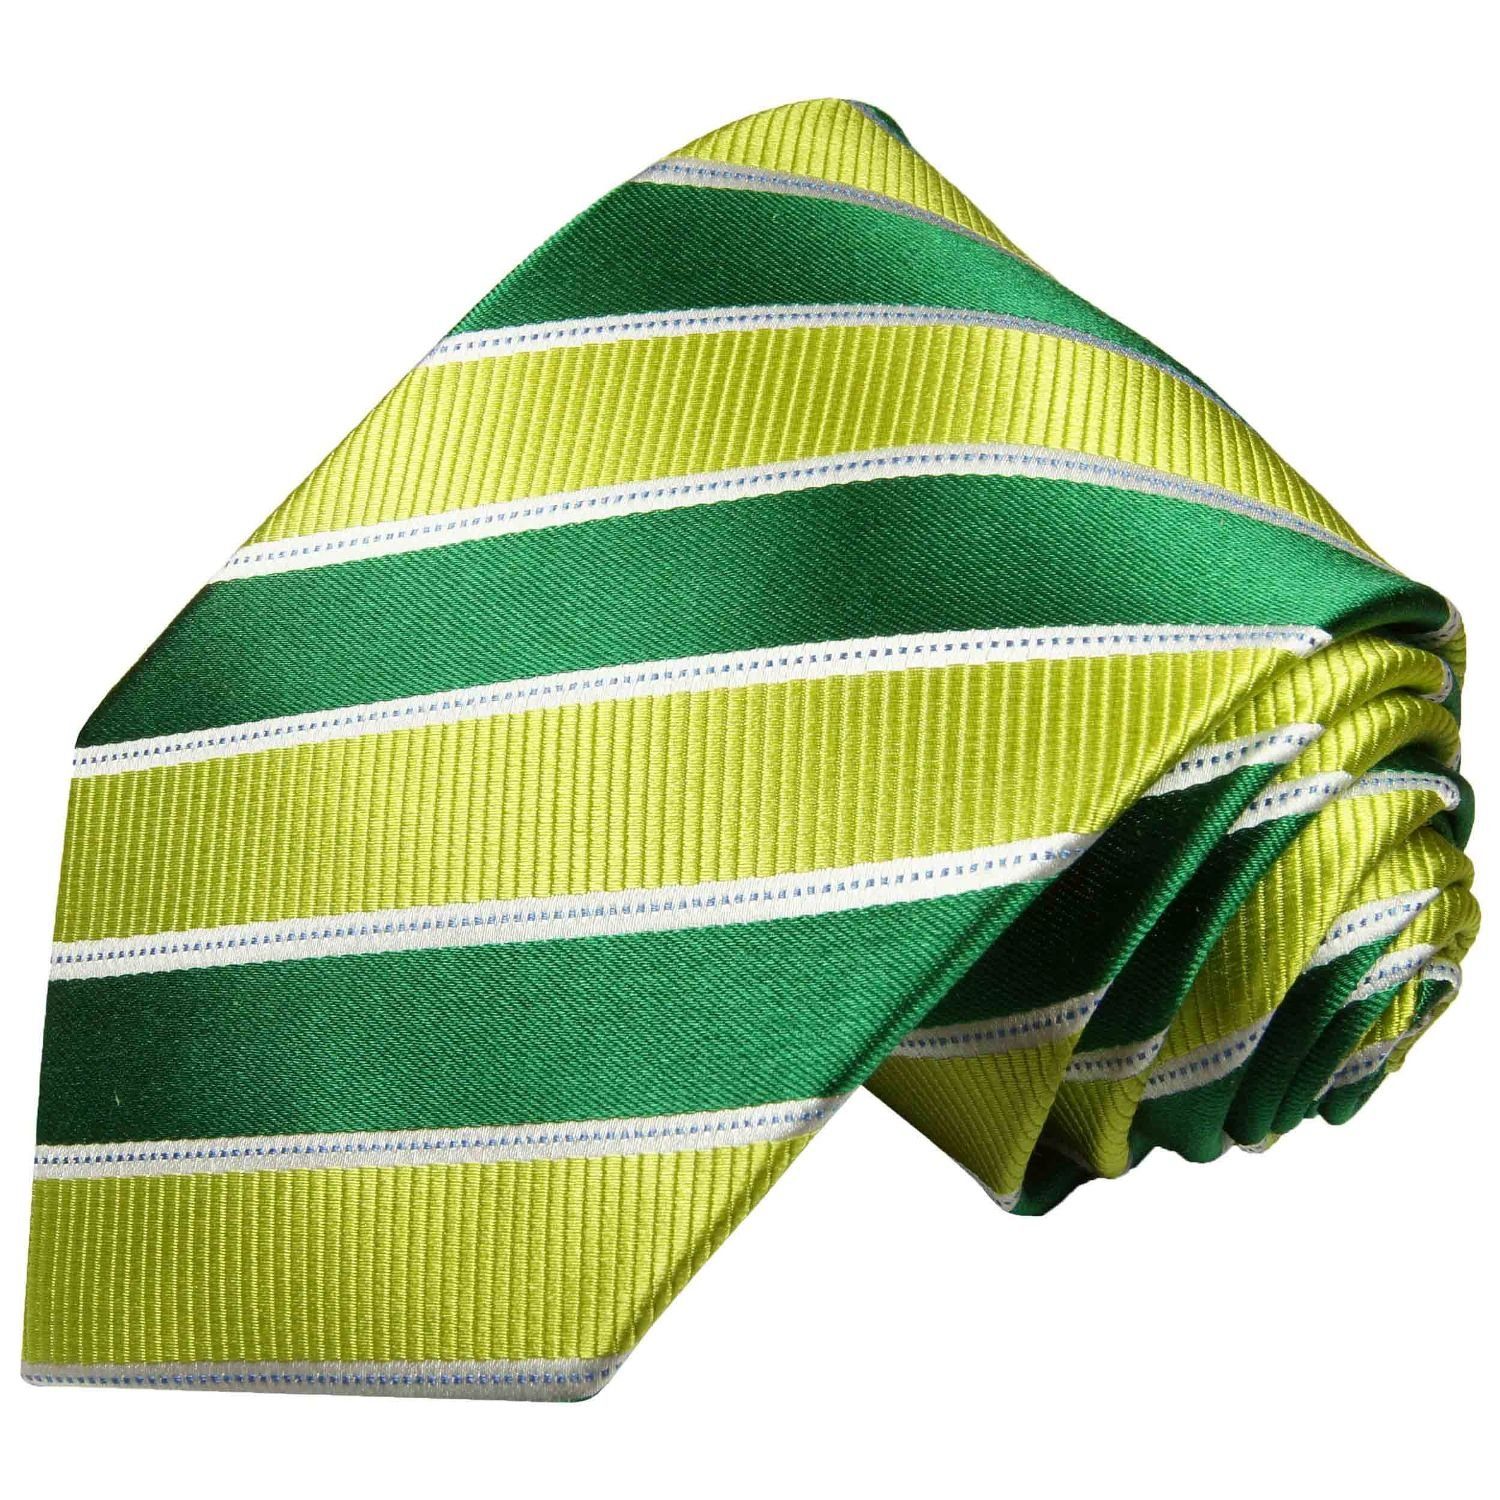 Paul Malone Krawatte Moderne Herren hellgrün Seide Seidenkrawatte grün Schmal gestreift 262 (6cm), 100